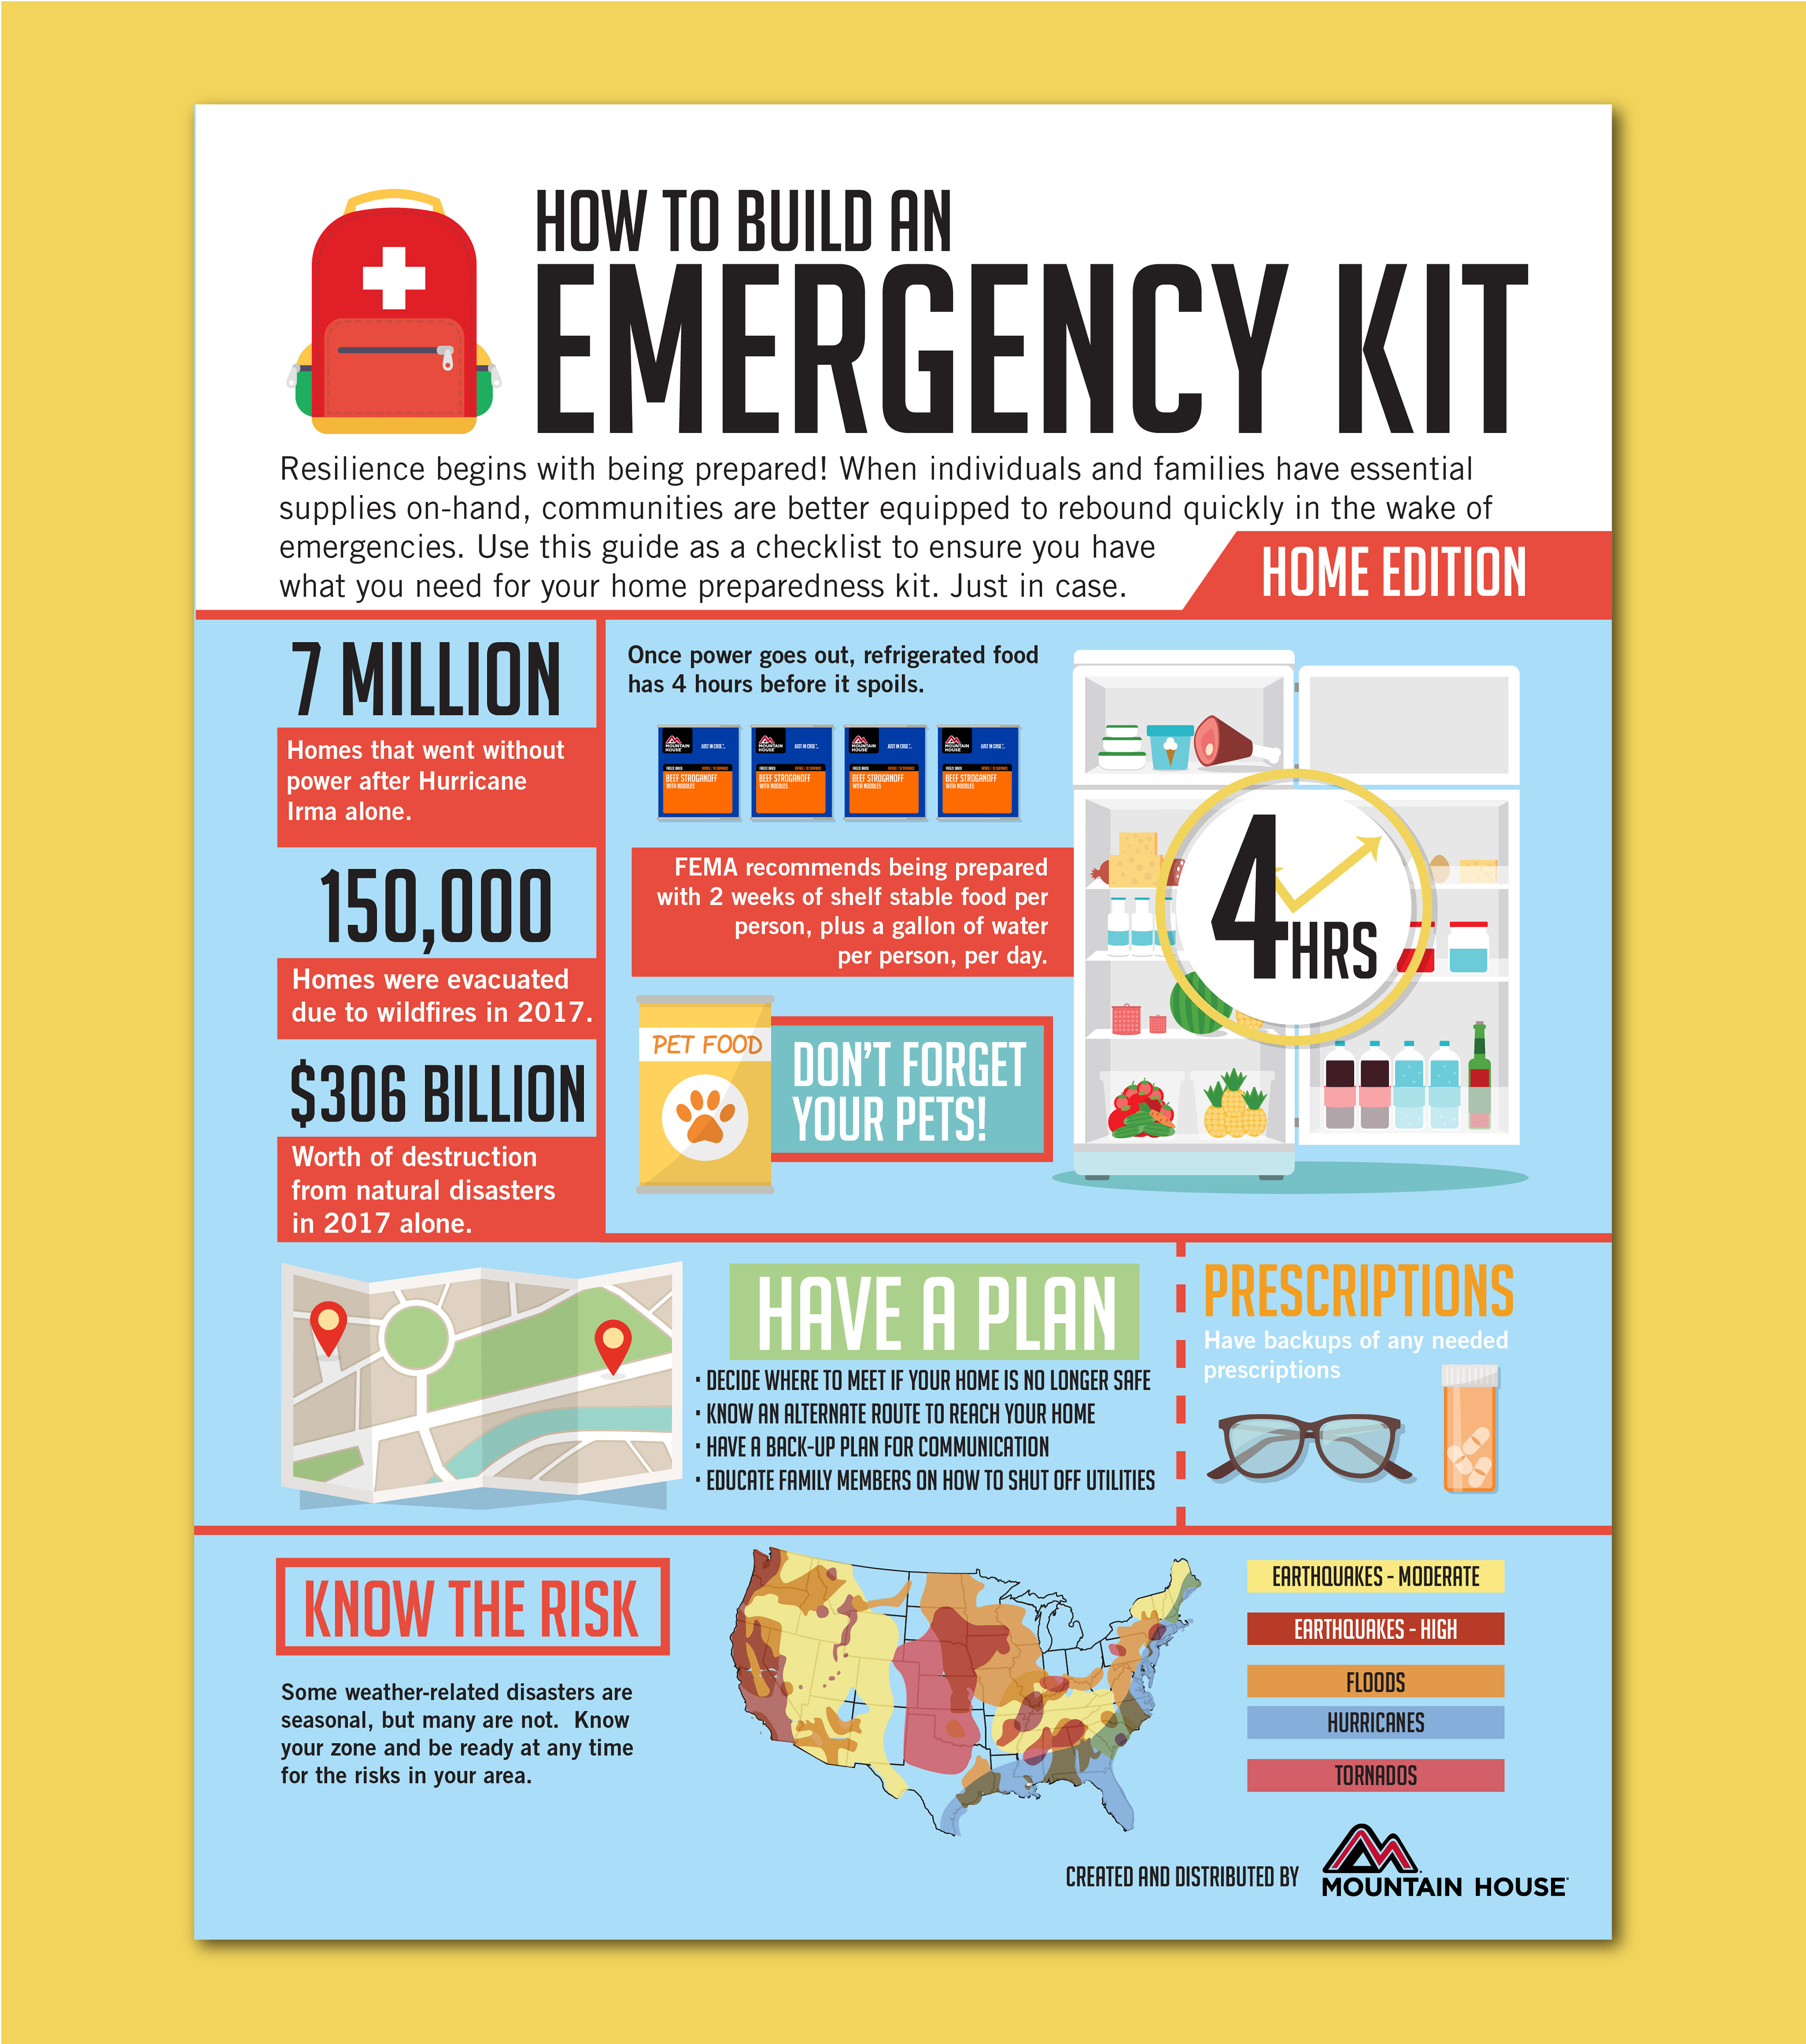 zac gilliland - Emergency Kit - Infographic